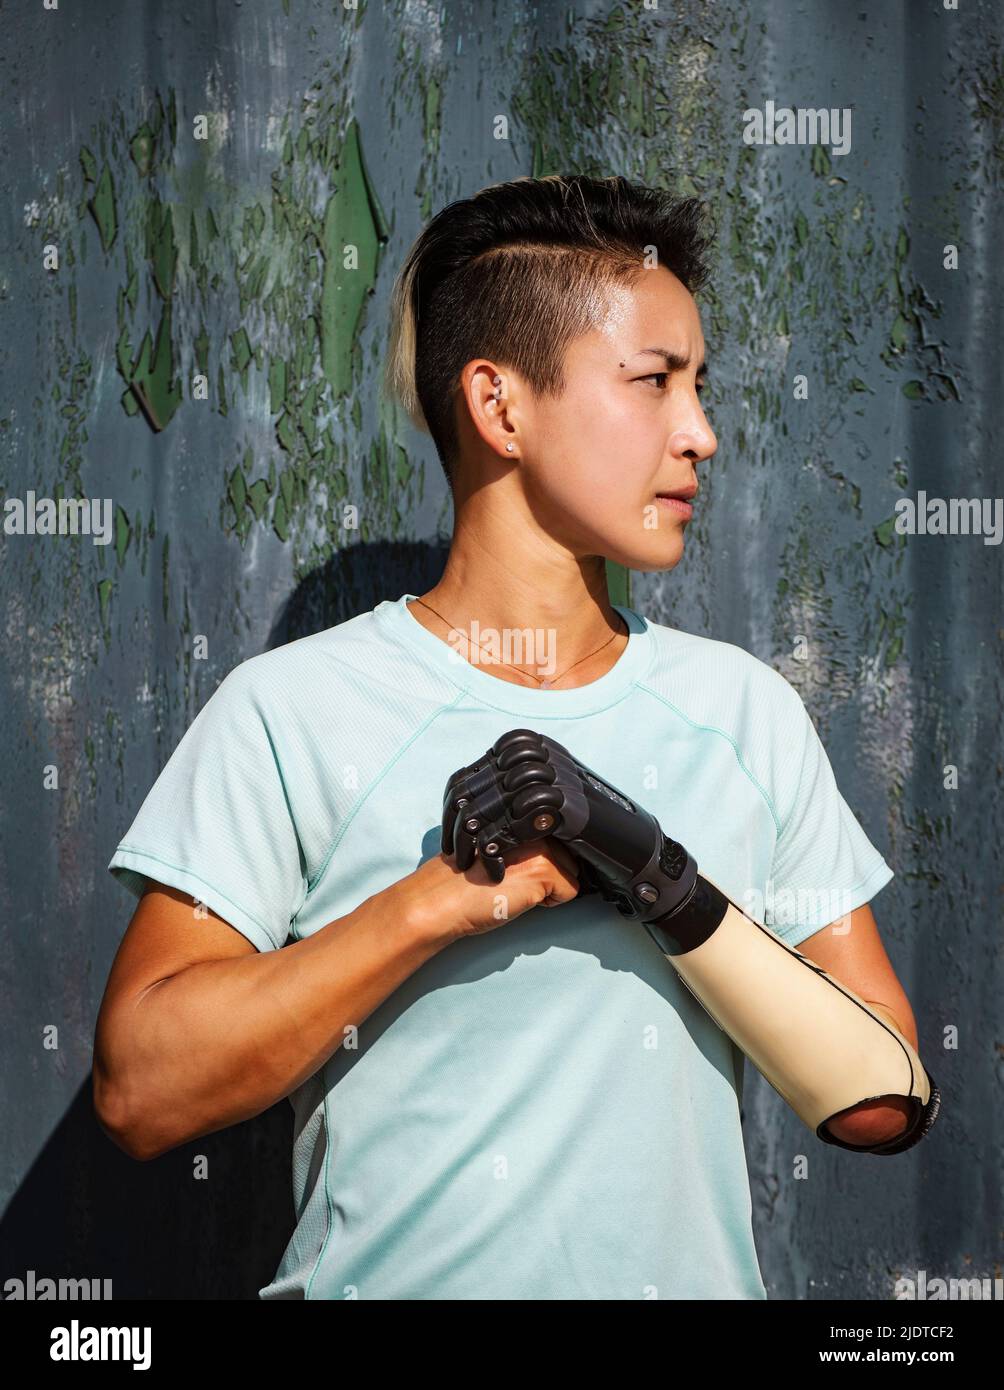 Portrait of athlete woman with prosthetic arm Stock Photo